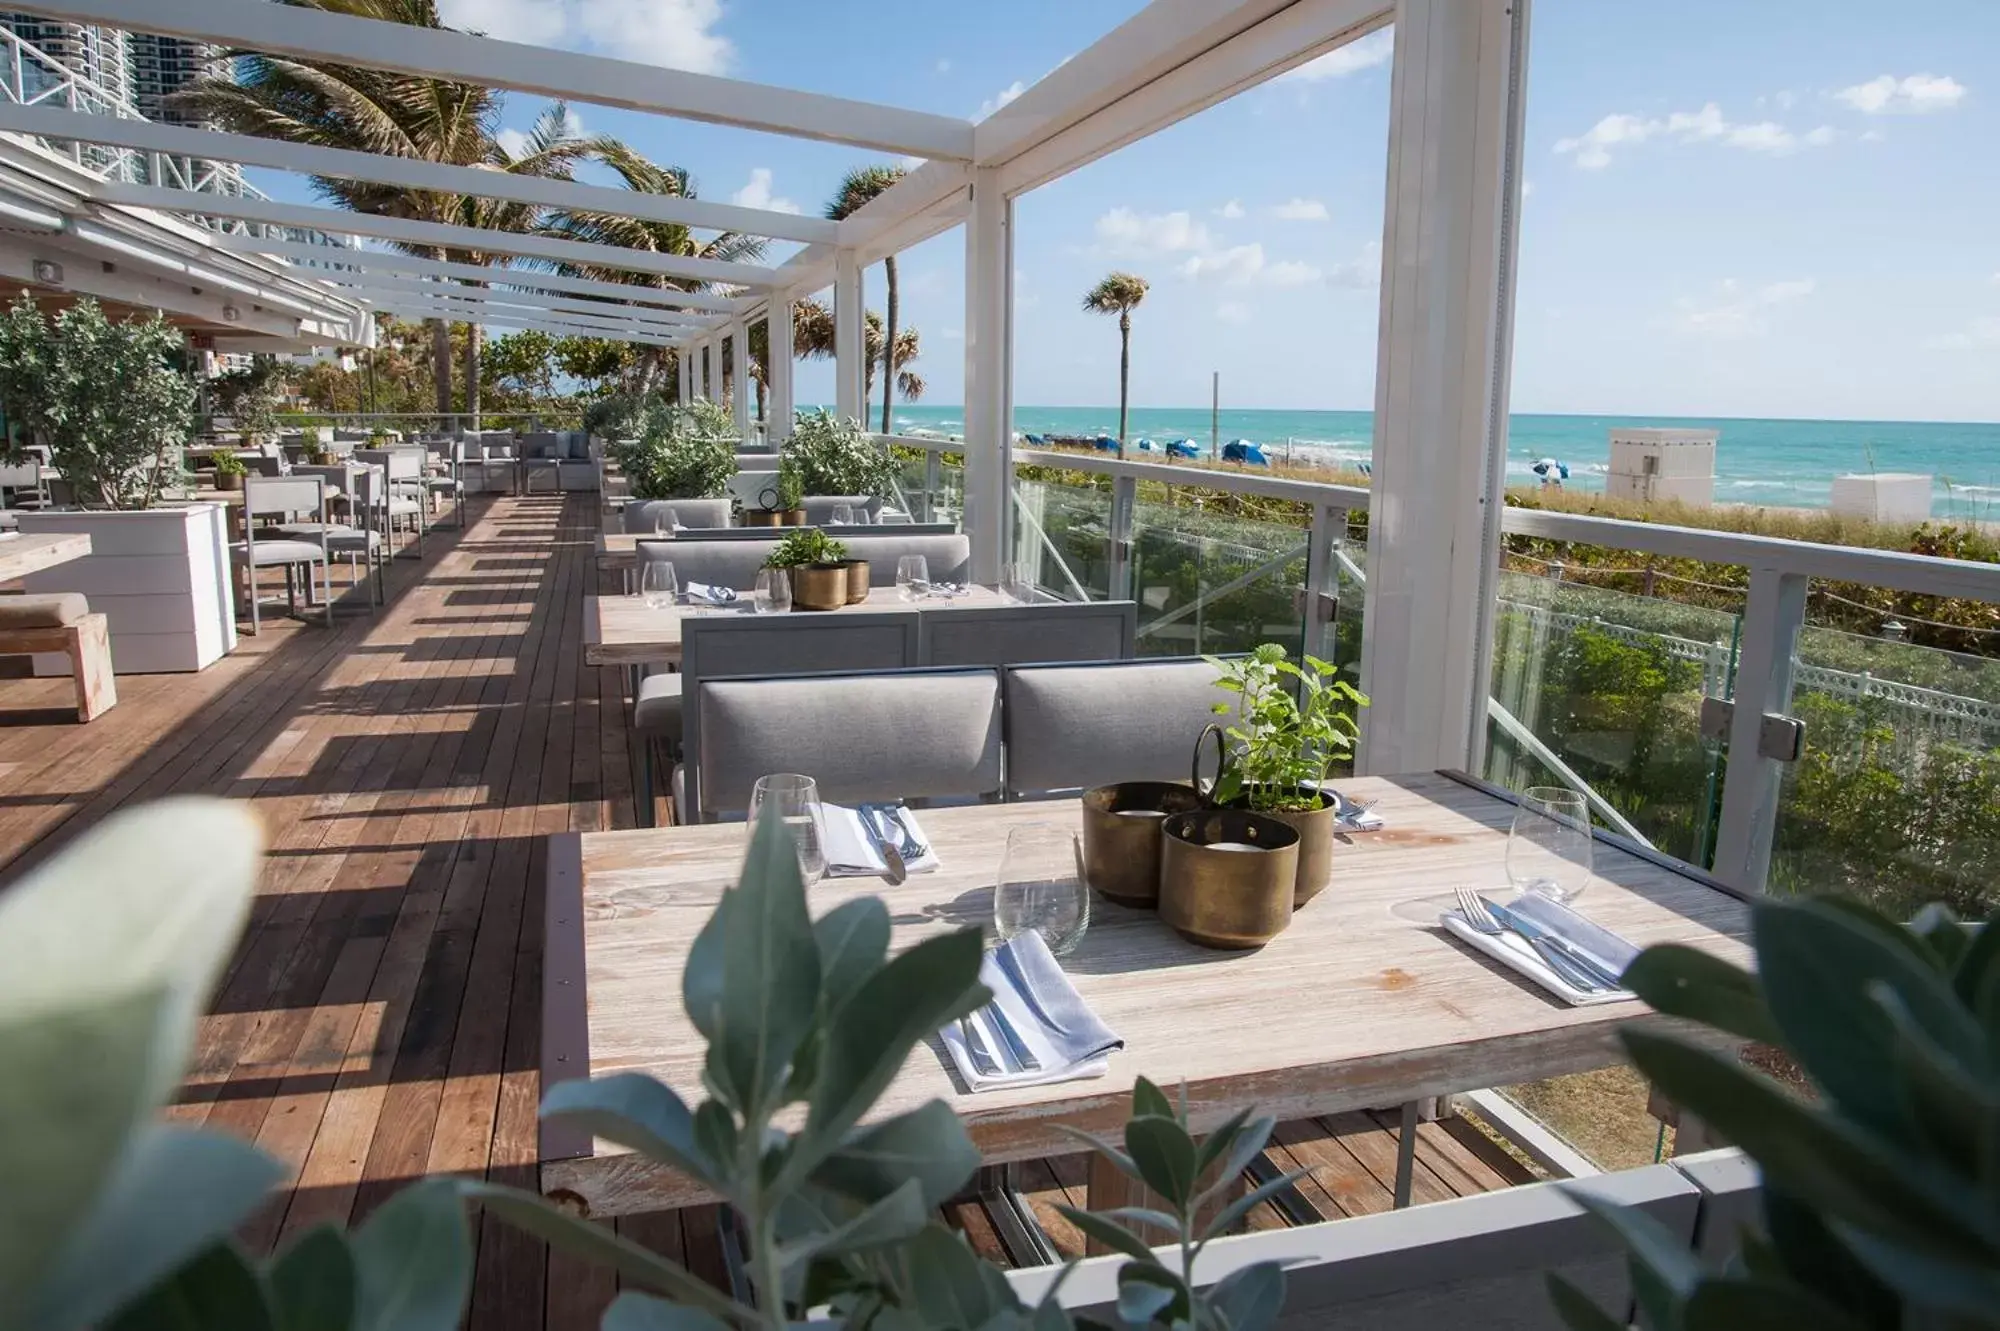 On site, Restaurant/Places to Eat in Eden Roc Miami Beach